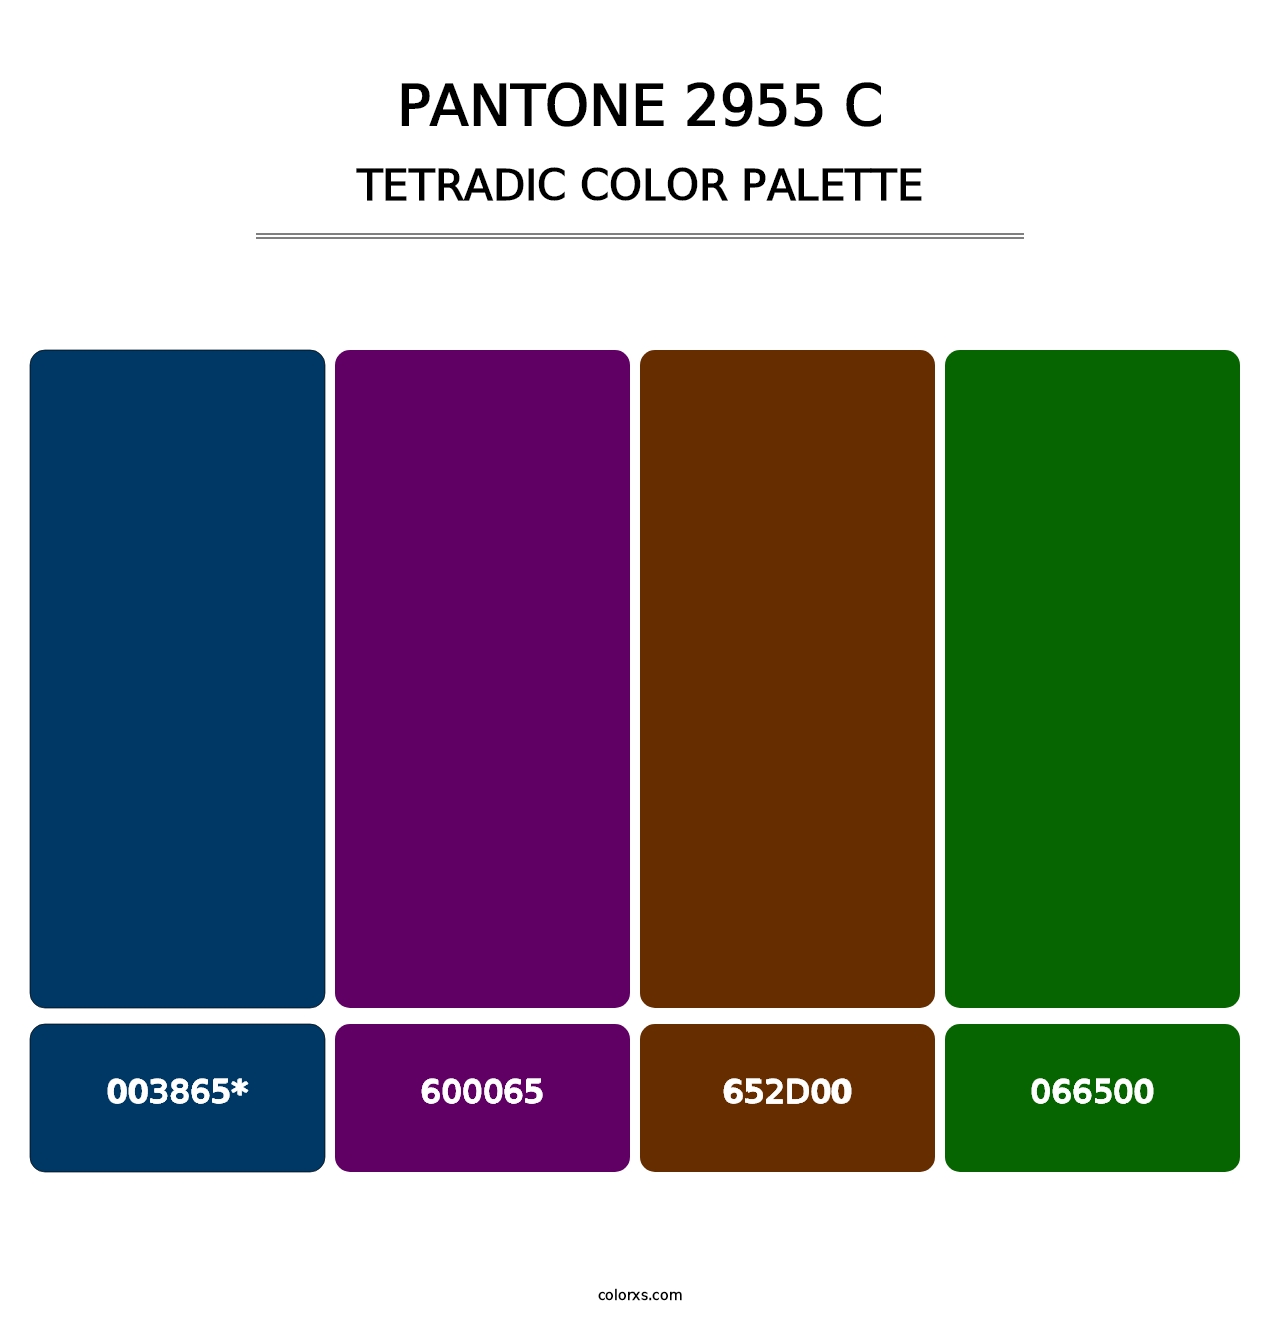 PANTONE 2955 C - Tetradic Color Palette